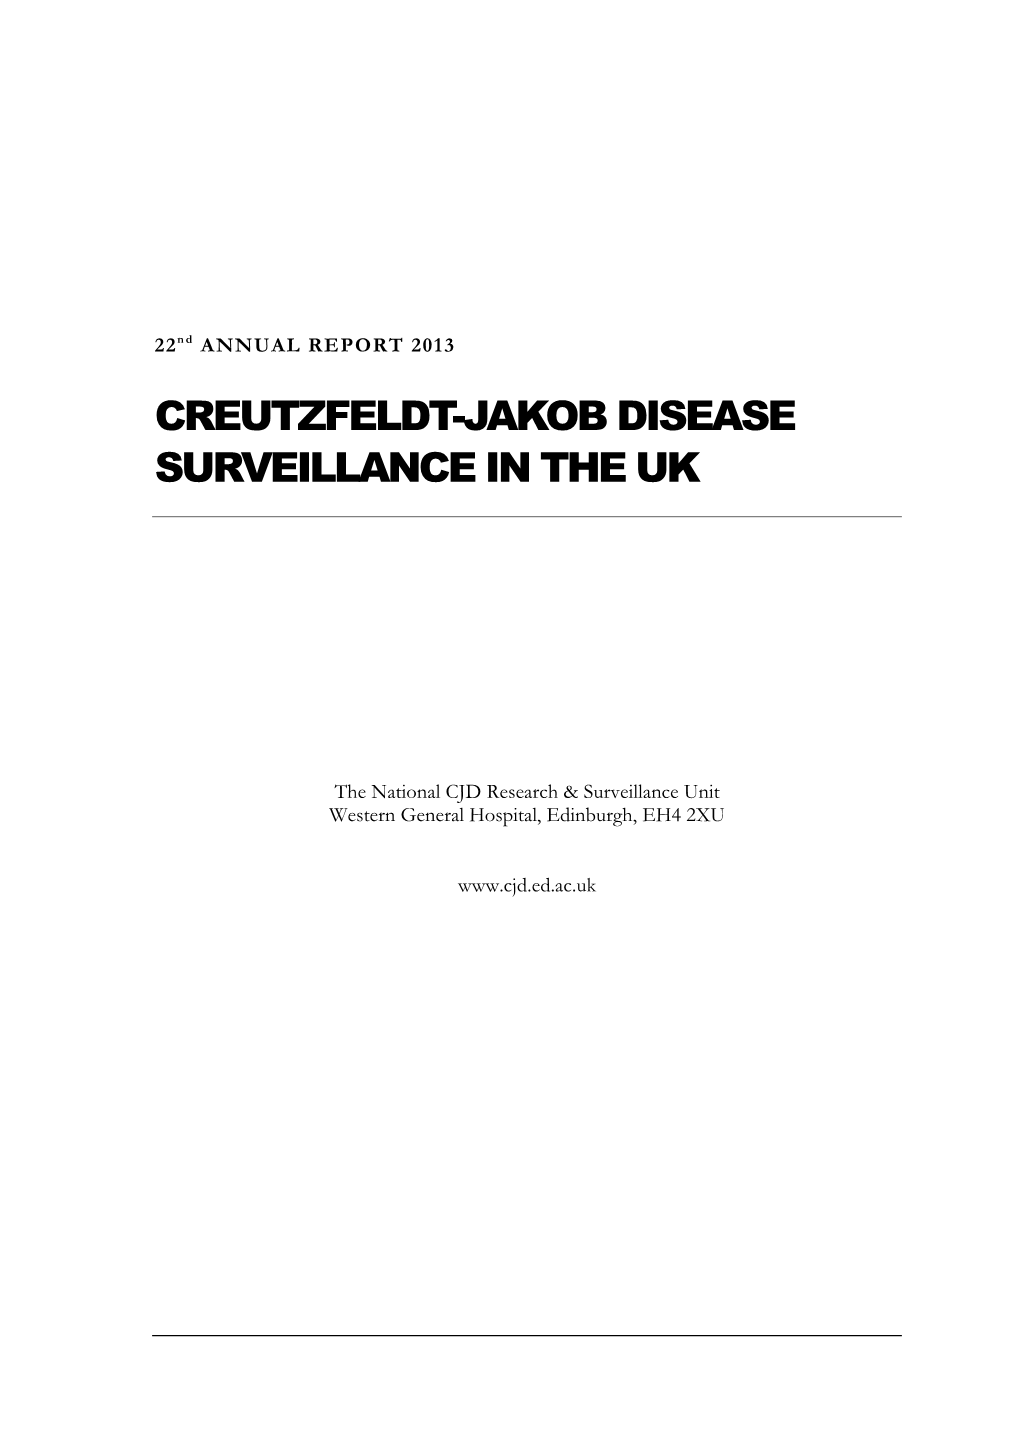 Creutzfeldt-Jakob Disease Surveillance in the Uk